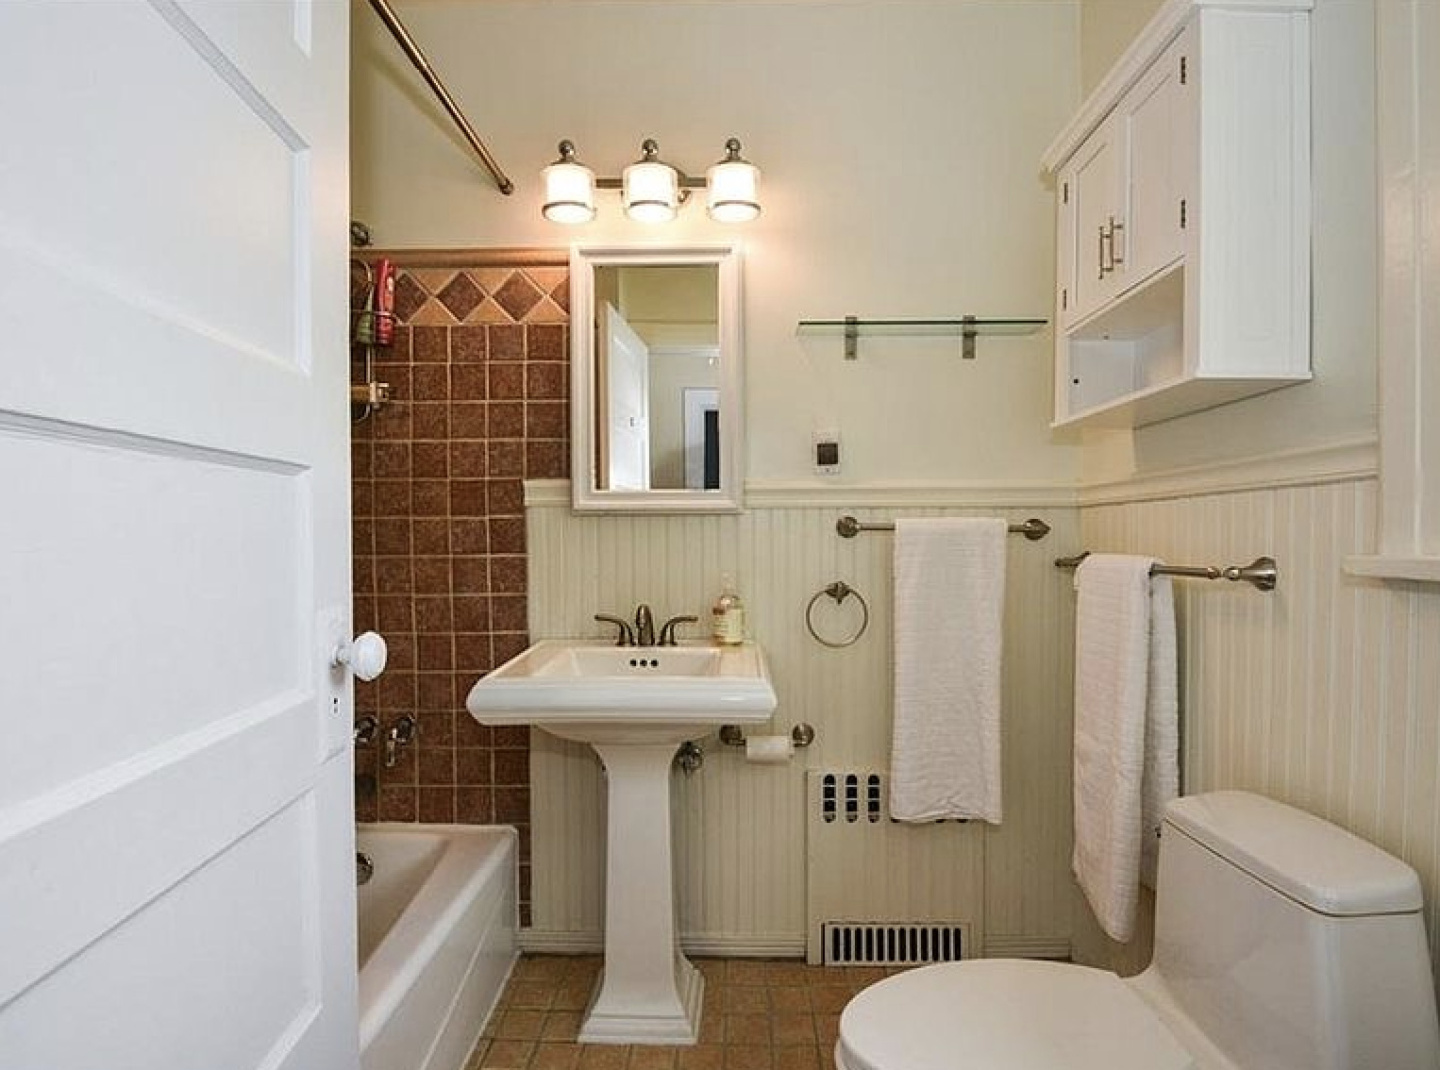 Simply by Simone - Simone Piliero - My Black and White Bathroom Renovation - Origional Bathroom 2 #bathroom #home #renovation #bathroomrenovation #diyhome #bathroomtiles #bathroomdecor #bathroomideas #bathroomrenovationideas 